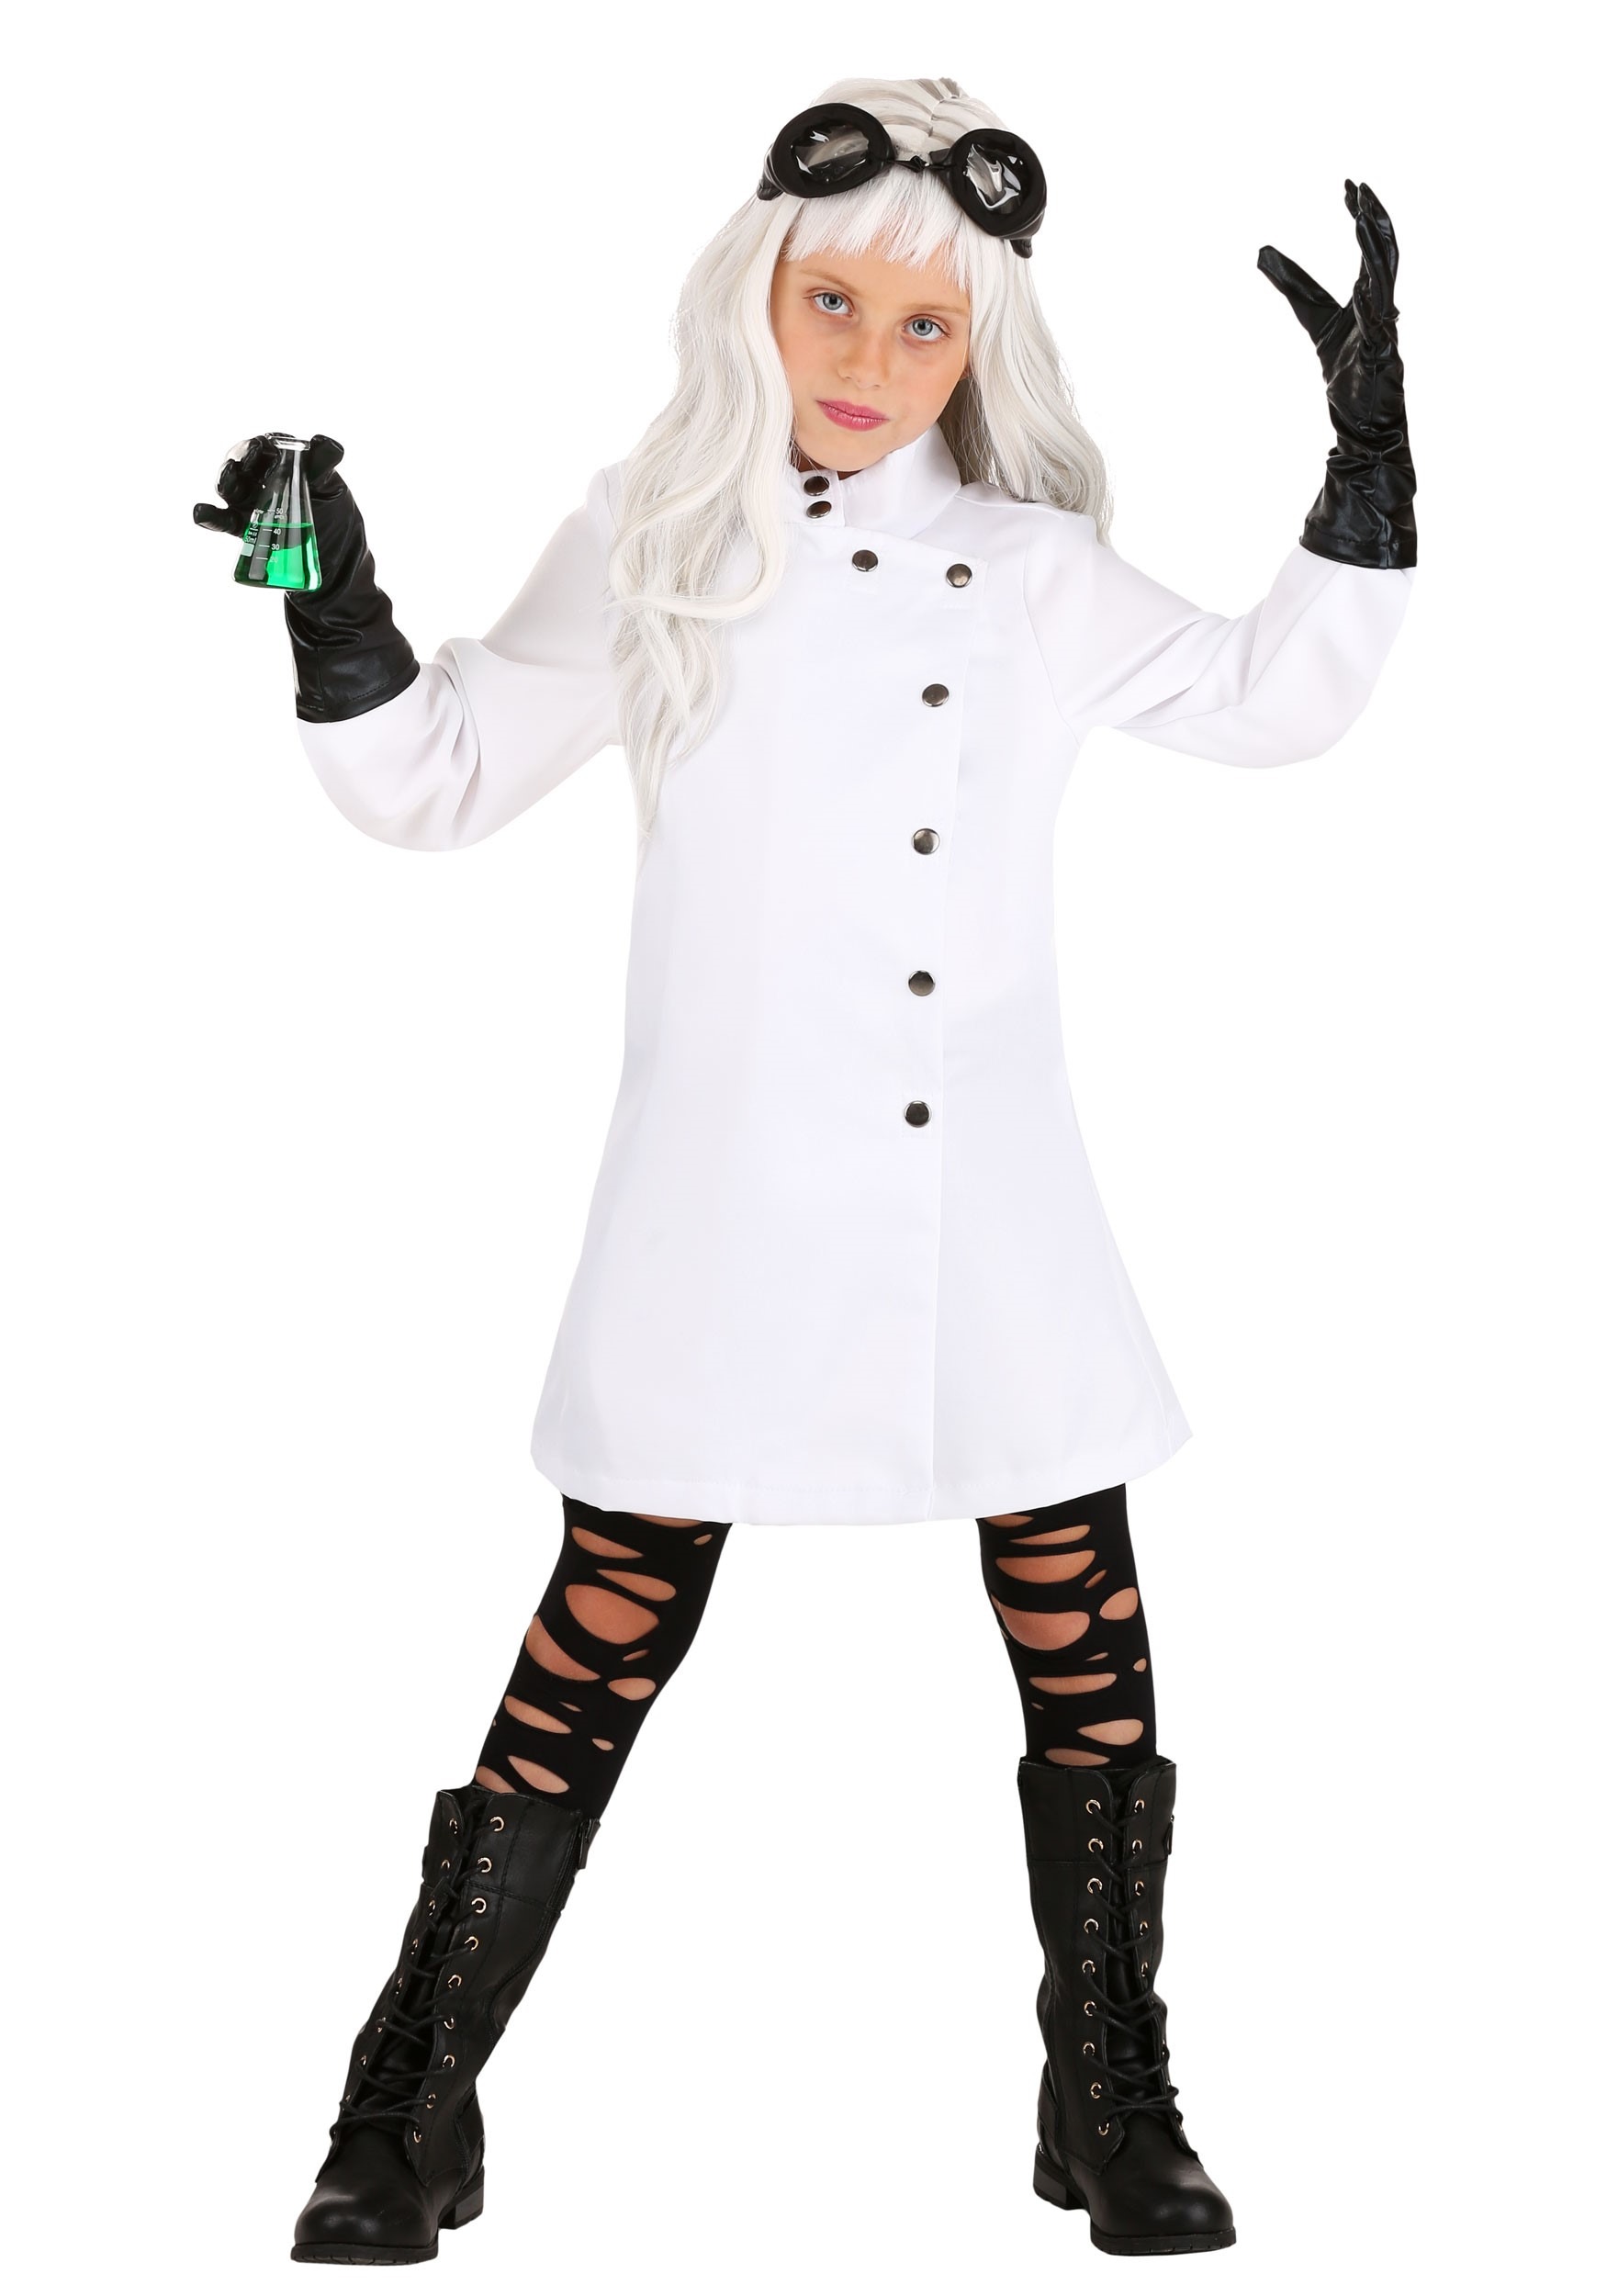 Exclusive Mad Scientist Kids Dress Costume